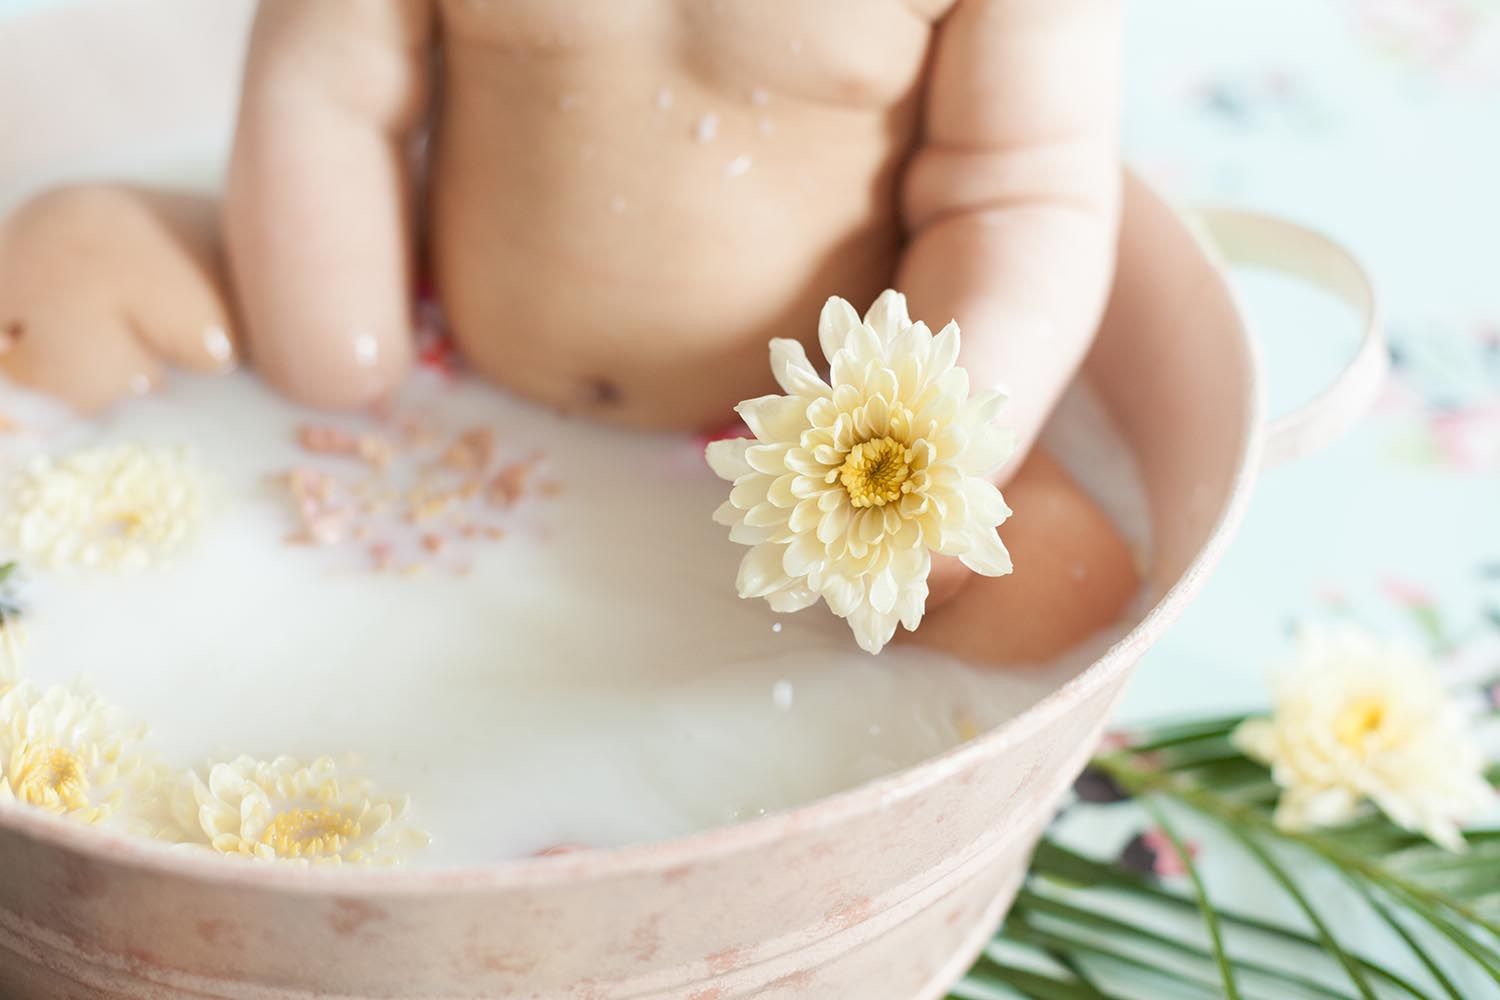 baby holding a flower in milk bath